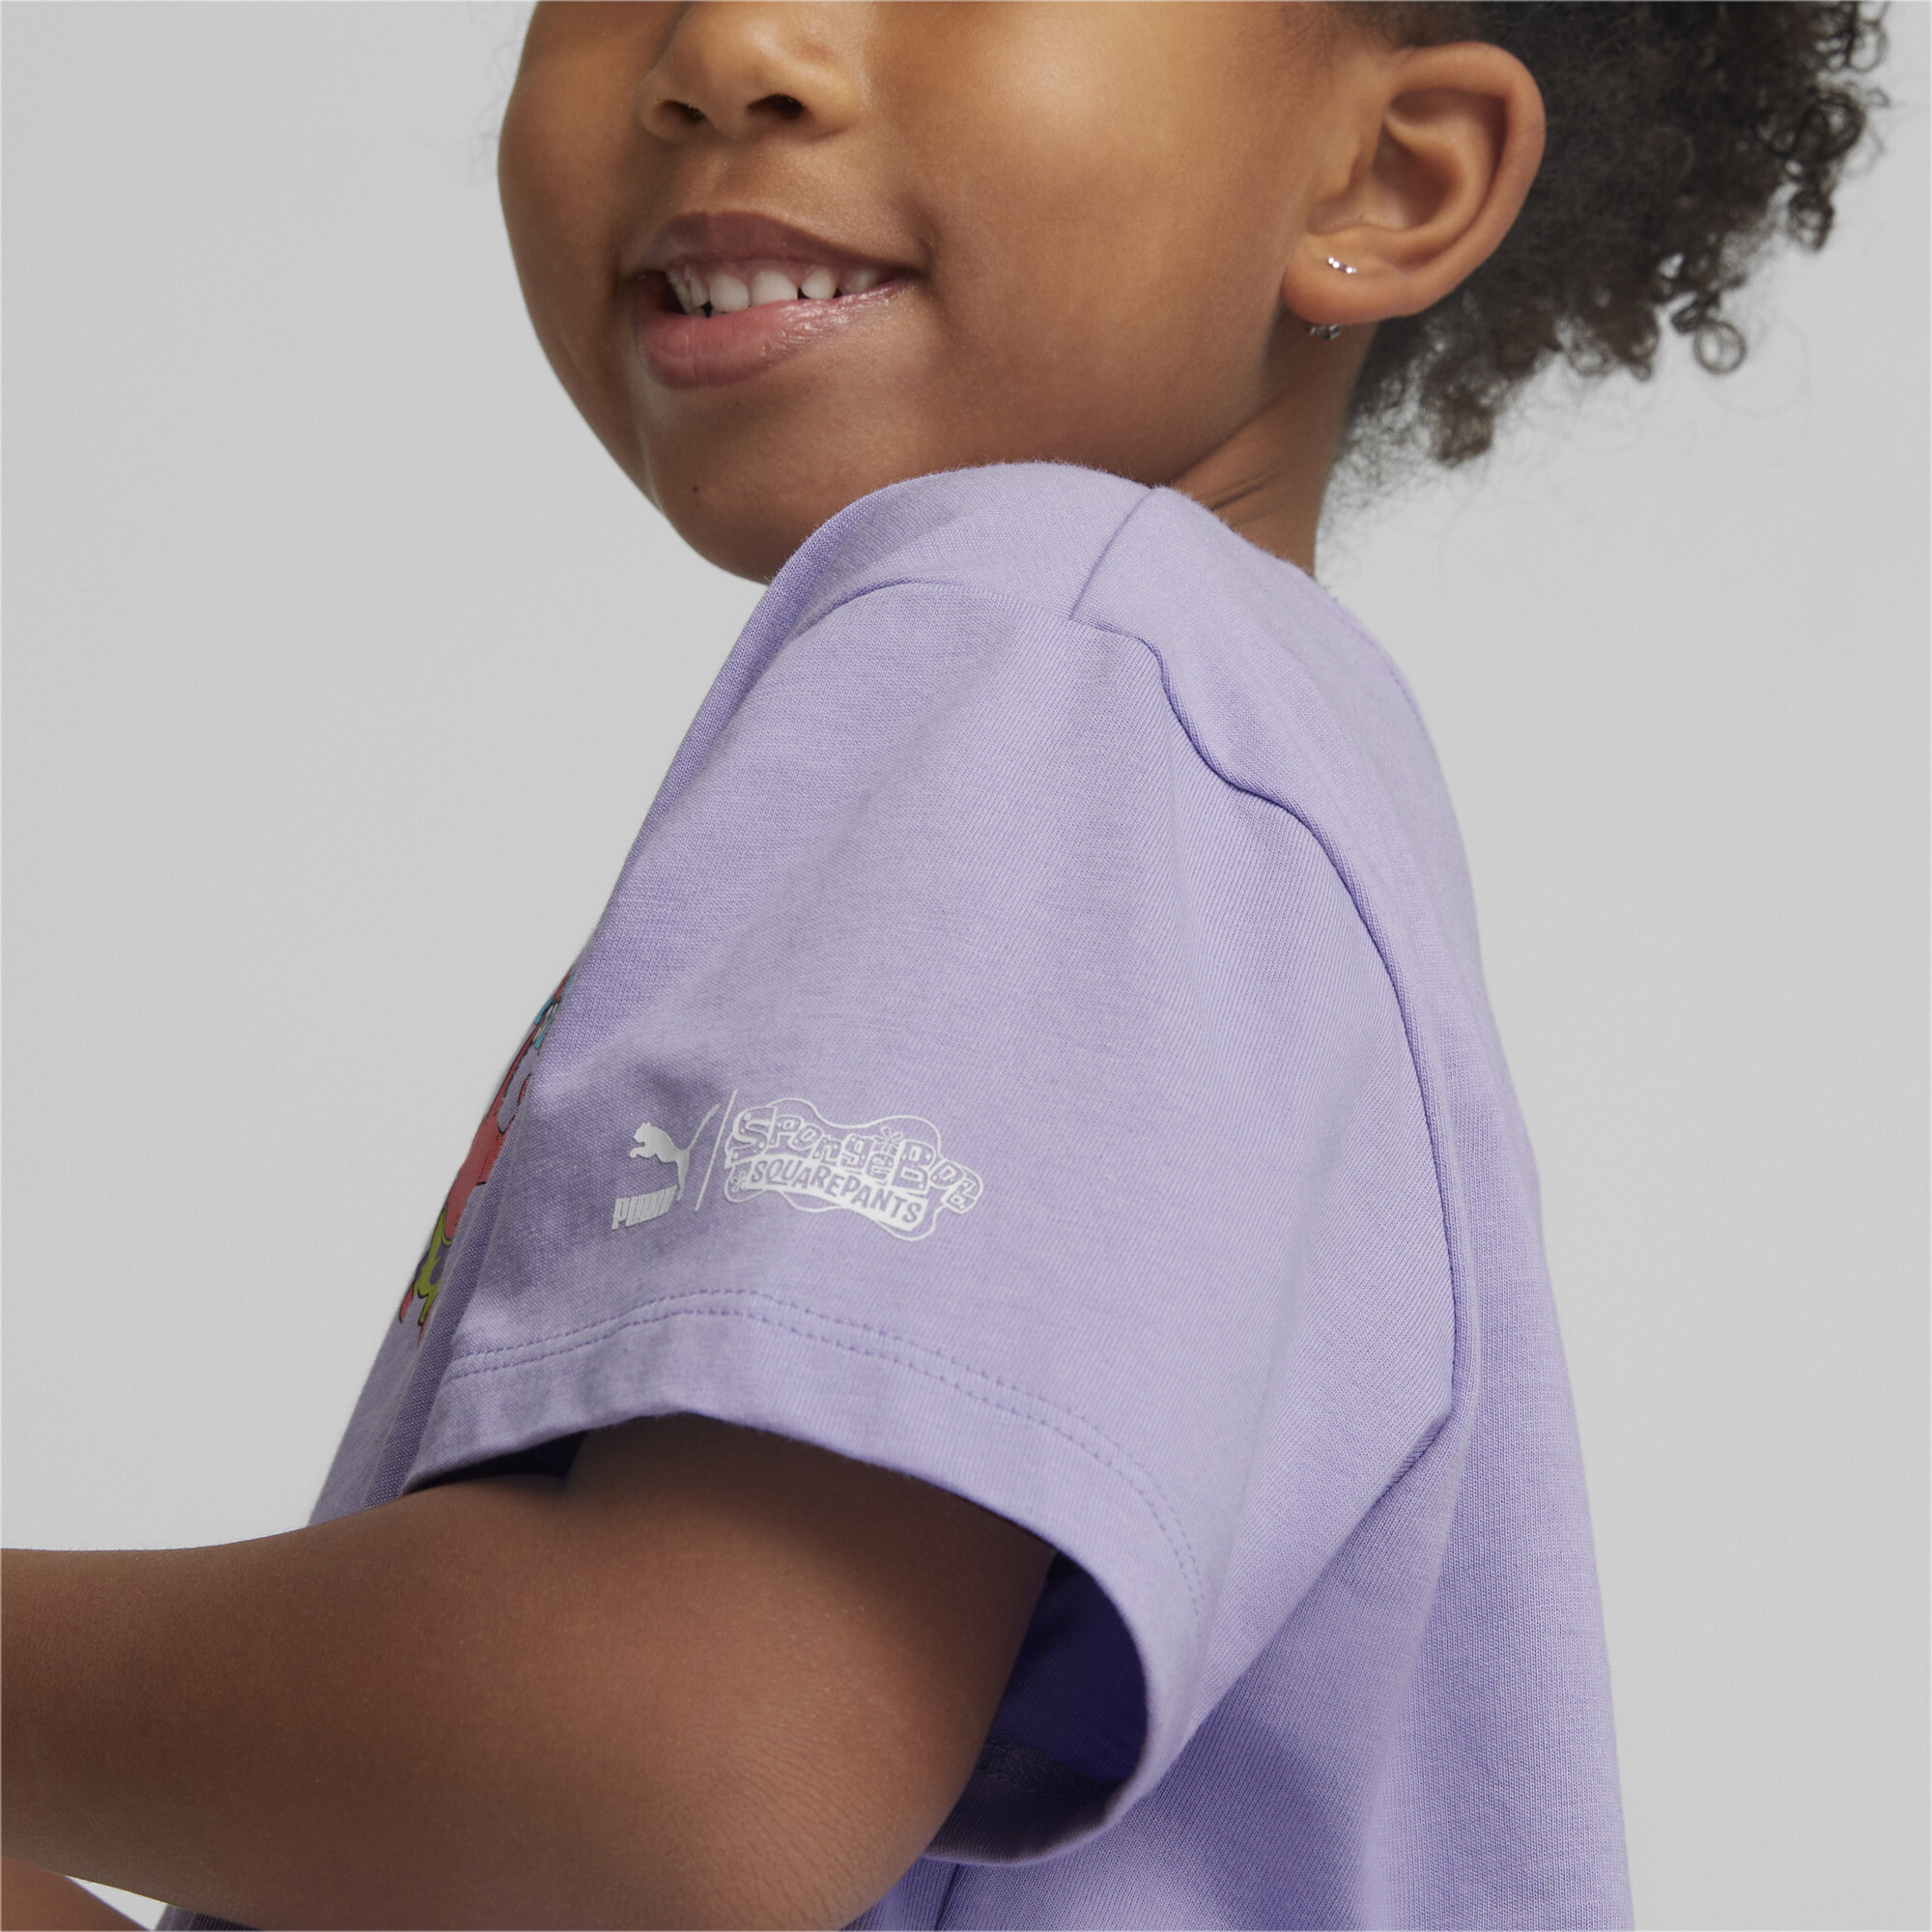 PUMA X SPONGEBOB T-Shirt Kids In Purple, Size 2-3 Months